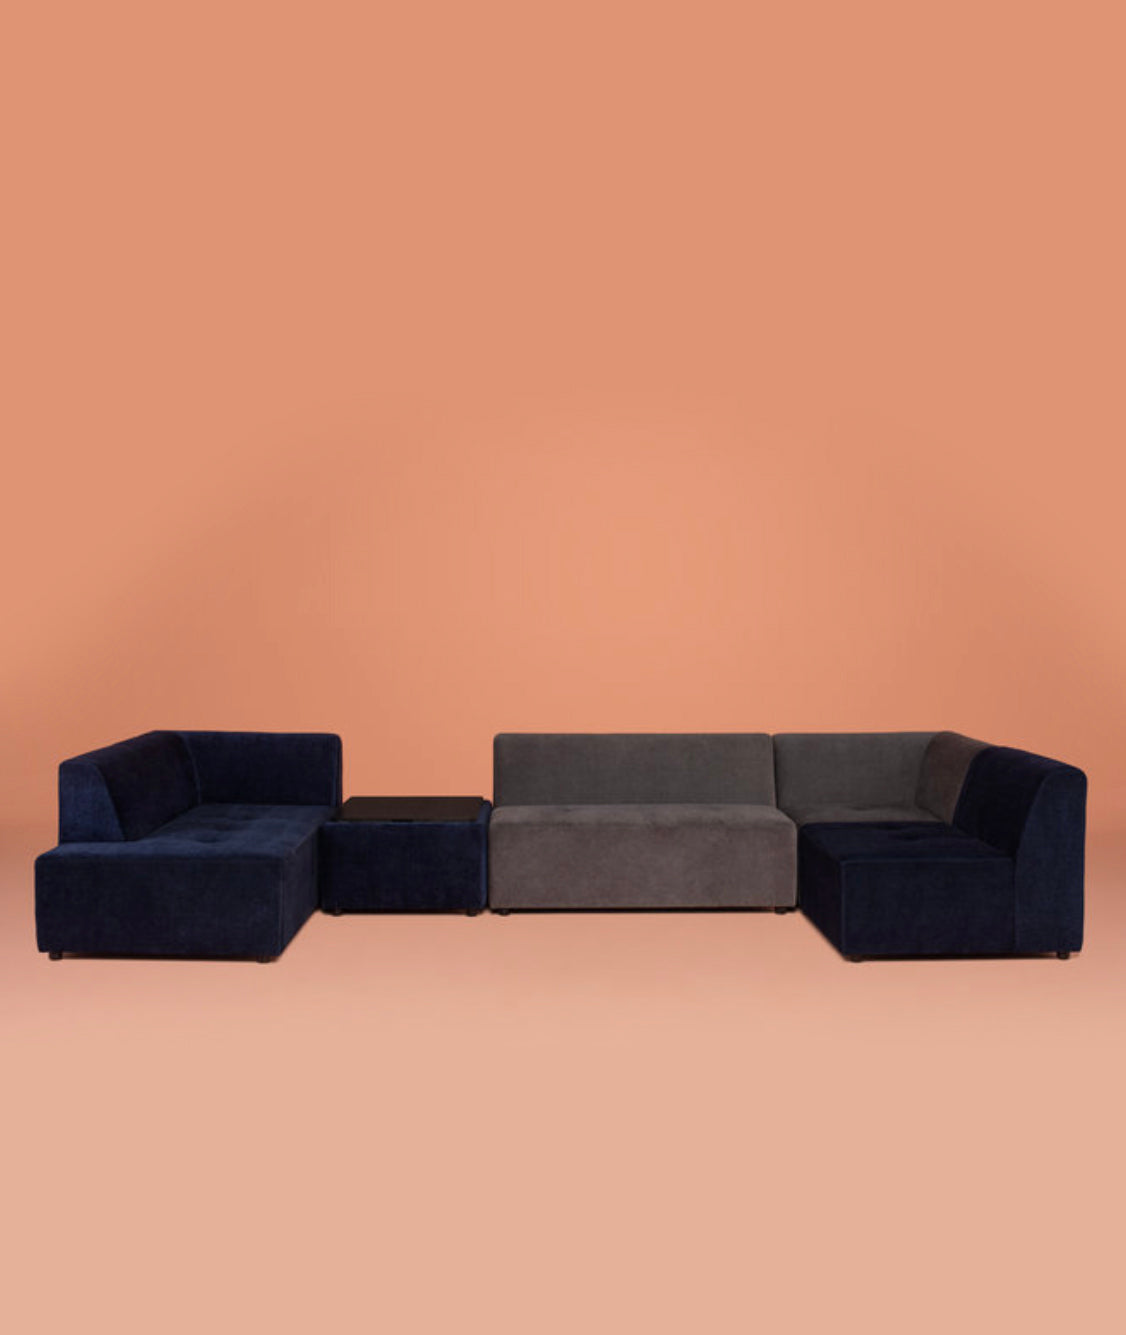 Parla Modular Corner Chair - 3 Colors Nuevo - BEAM // Design Store